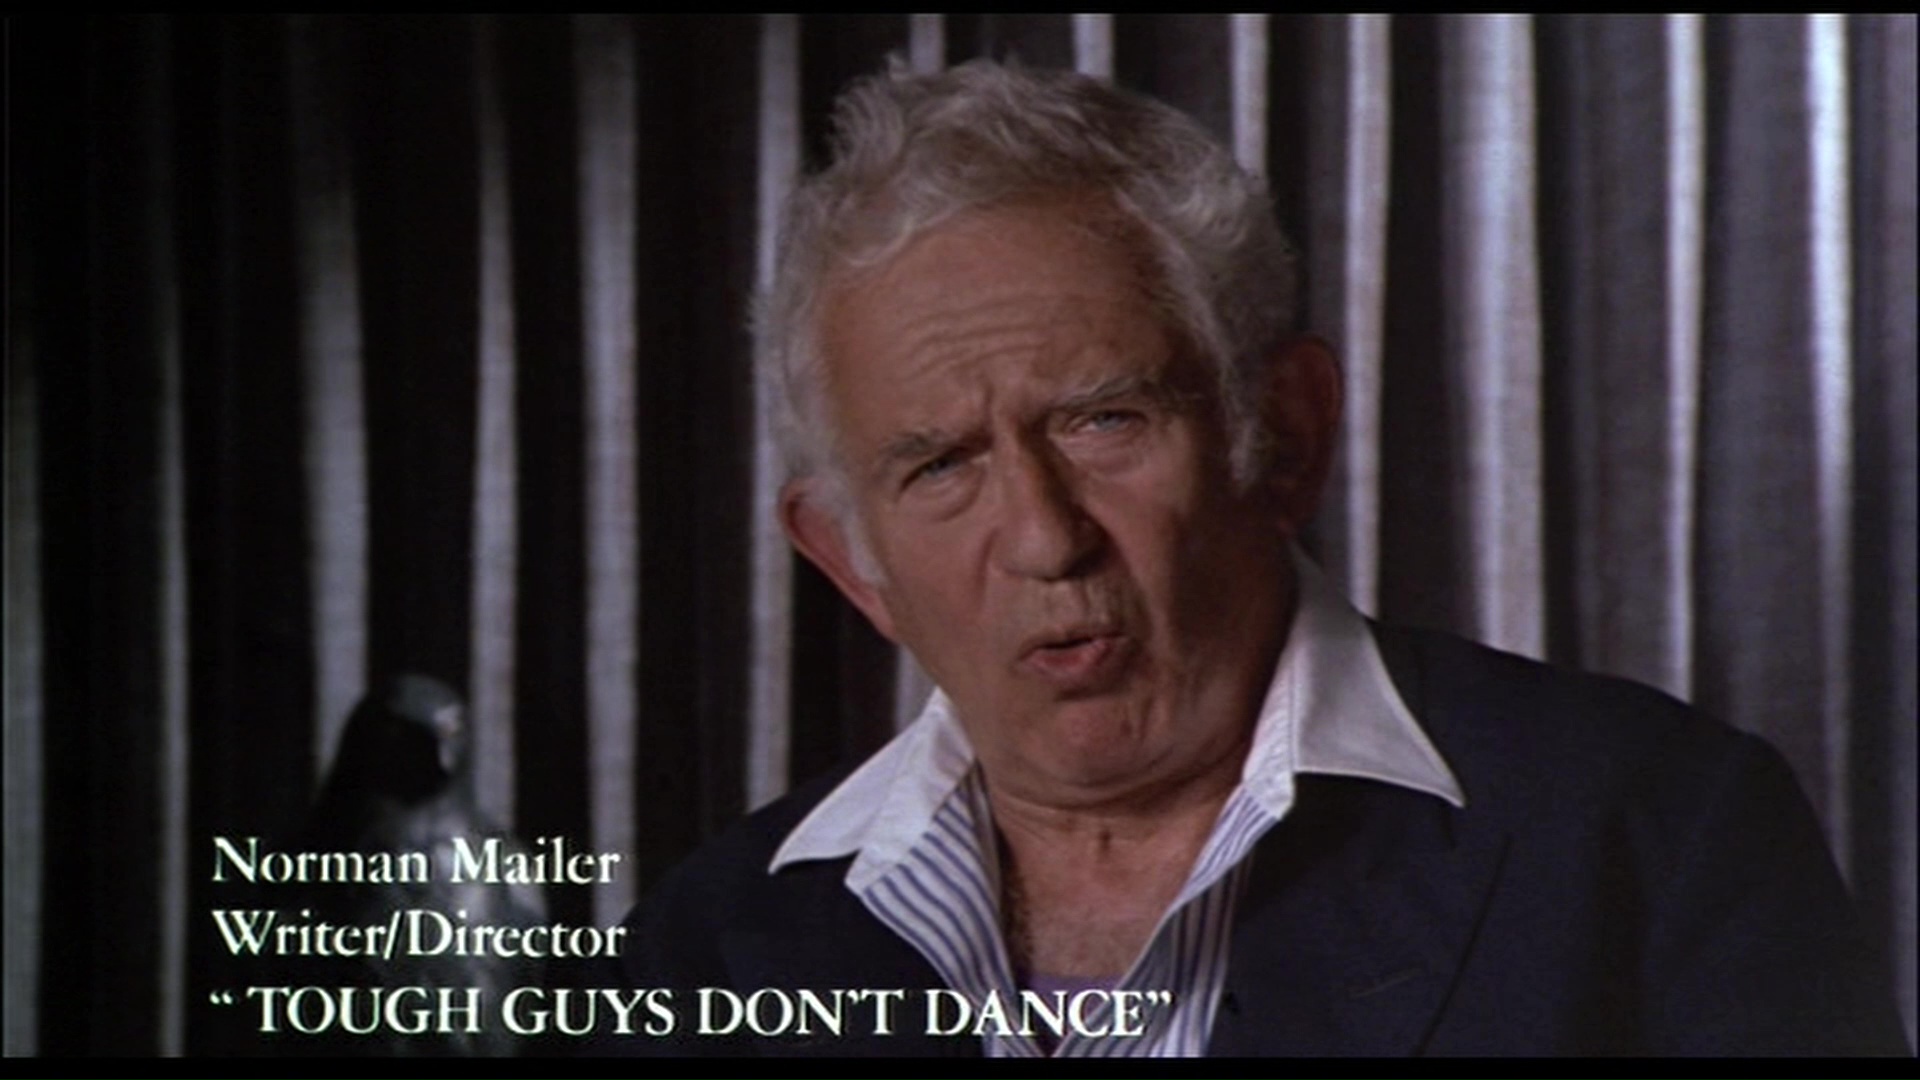 Tough Guys Don't Dance theatrical trailer